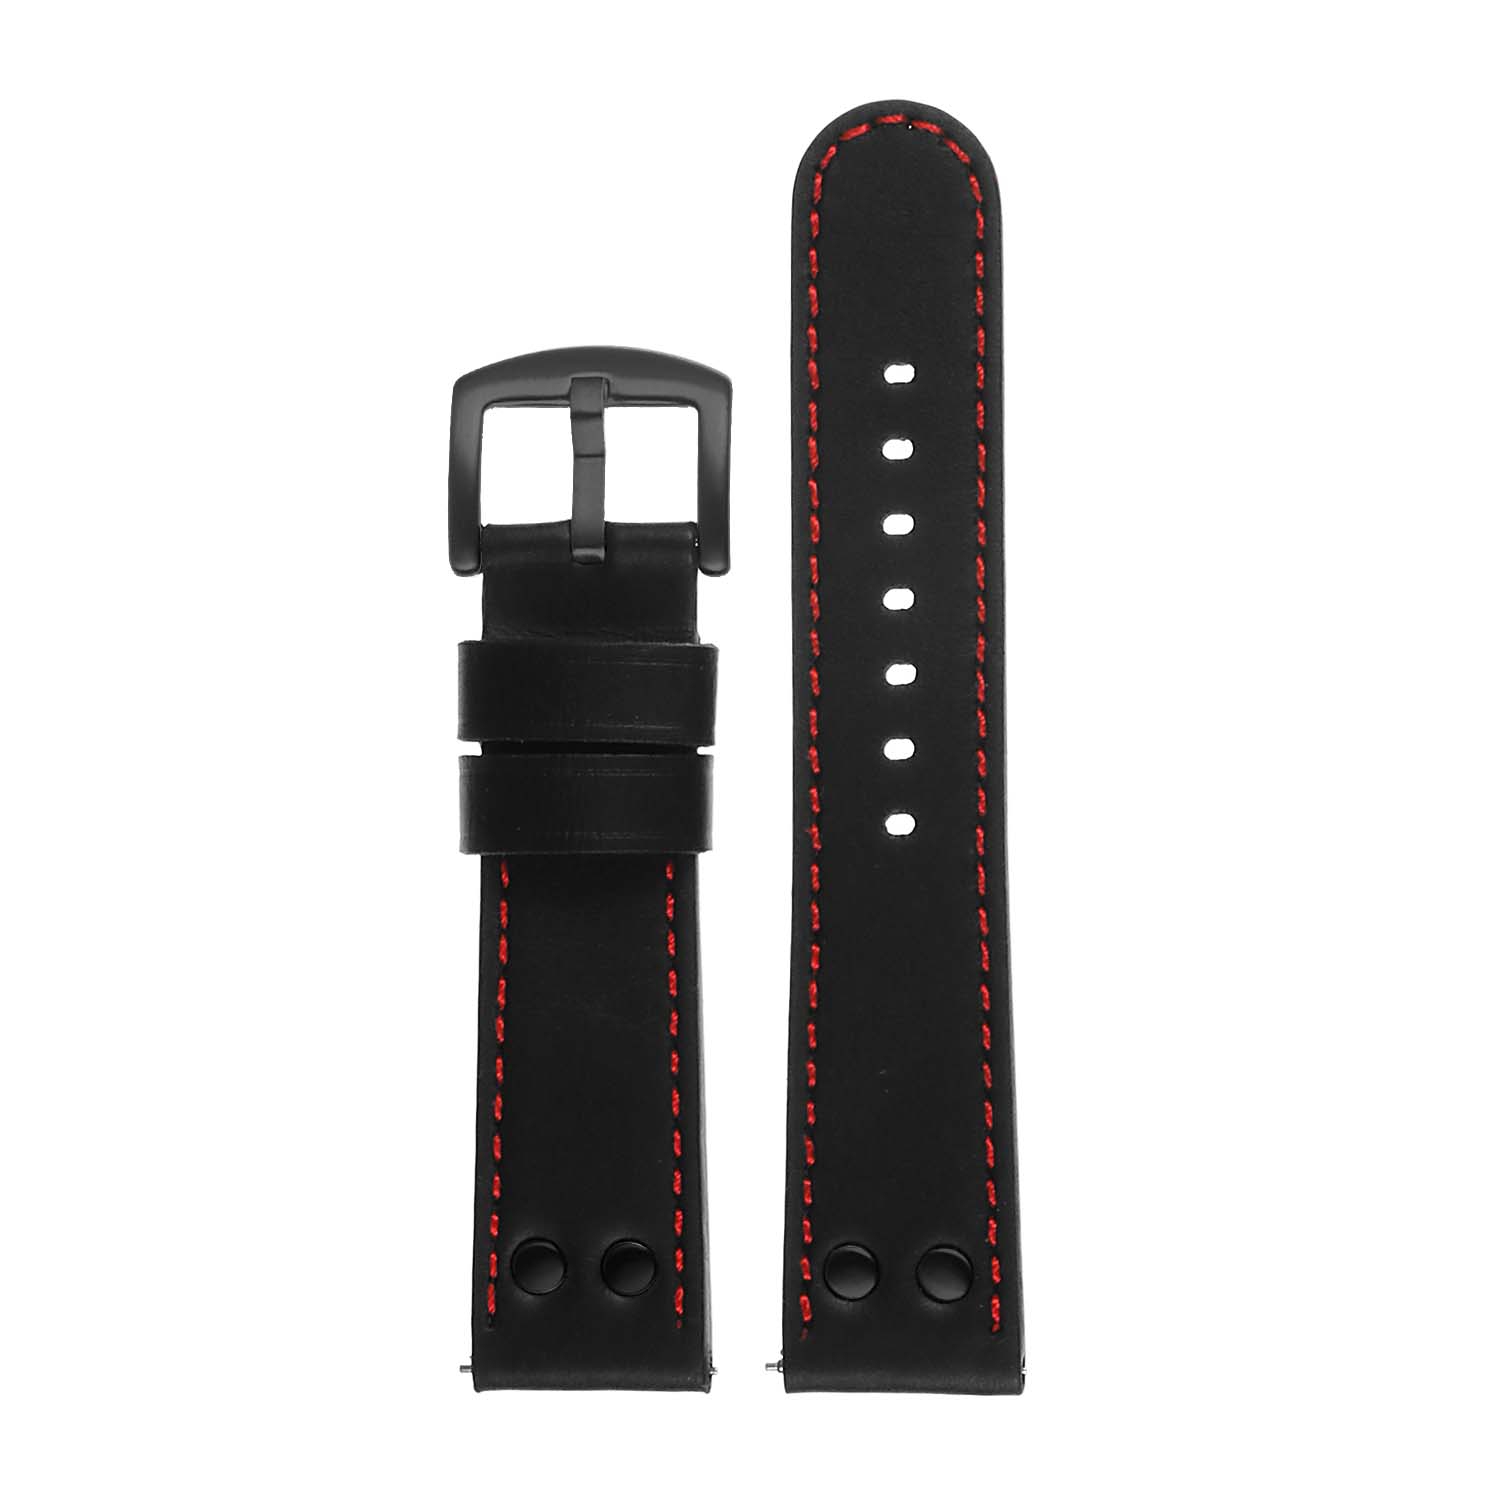 DASSARI Leather Pilot 20mm Watch Band Strap for Samsung Galaxy Watch 42mm - Black & Red (Black Buckle)